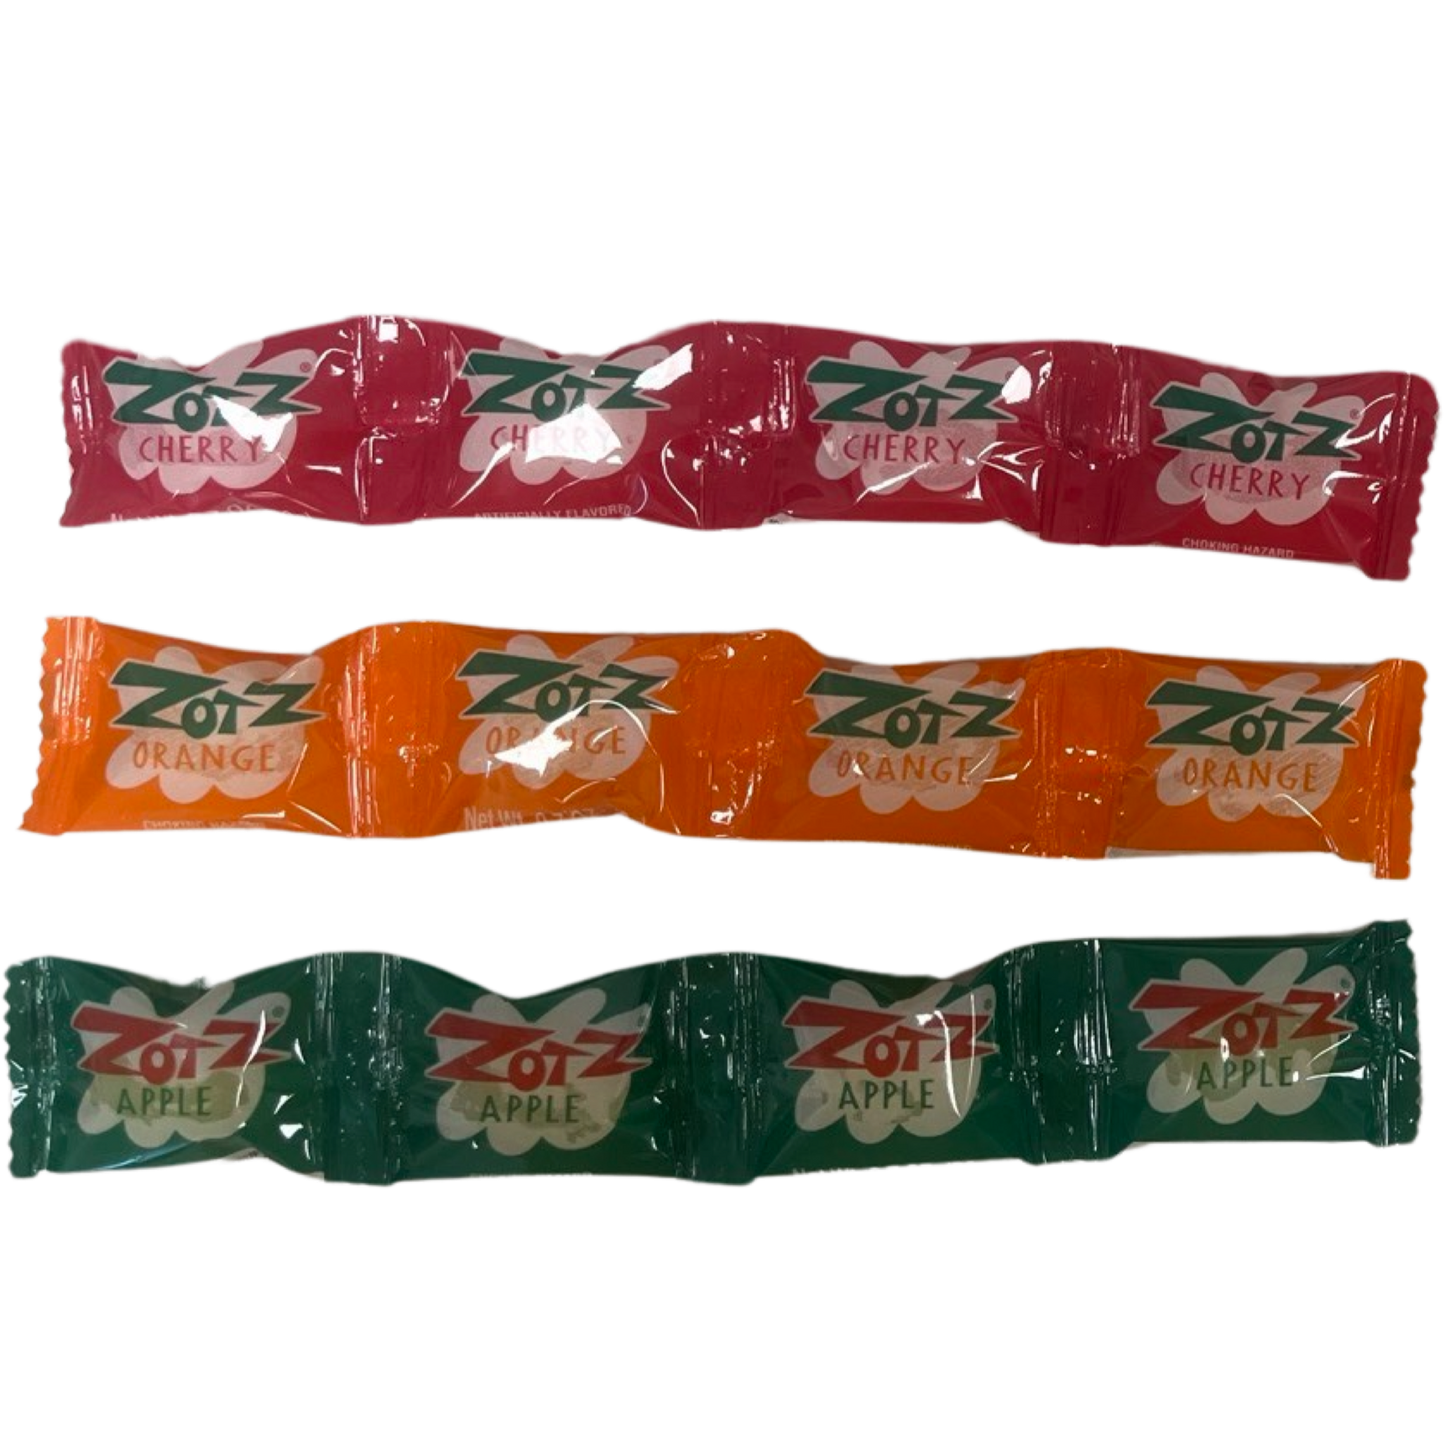 Zotz Fizz Power Candy